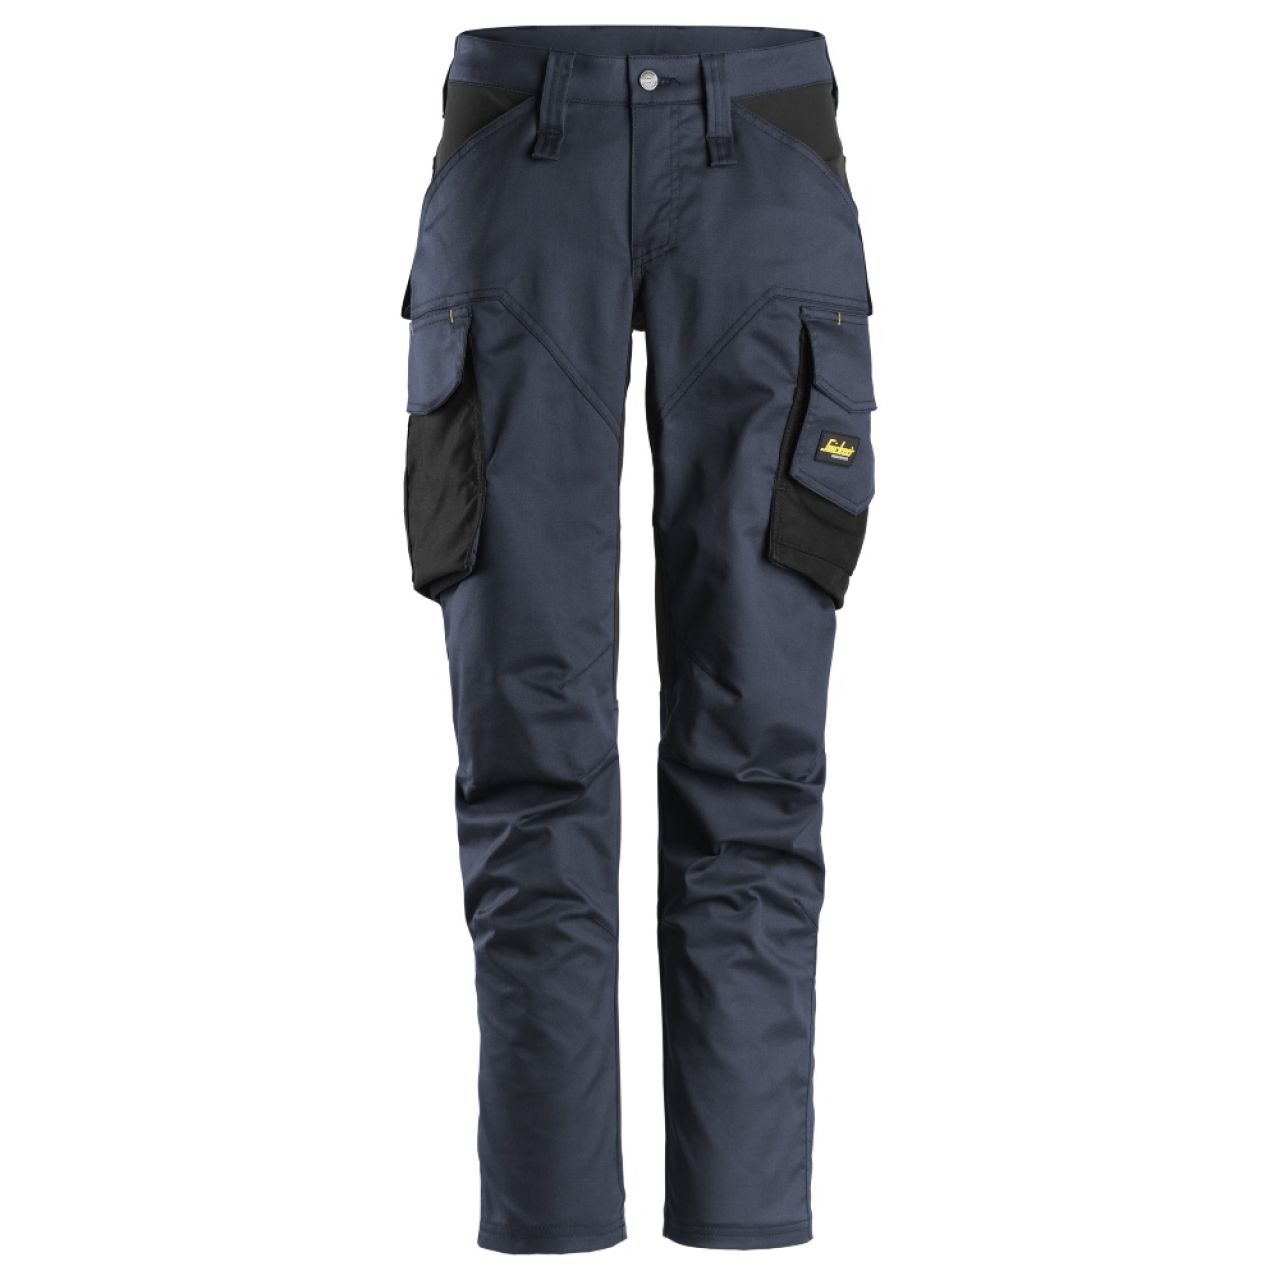 6703 Pantalones largos de trabajo elásticos para mujer con bolsillos para rodilleras AllroundWork azul marino-negro talla 76